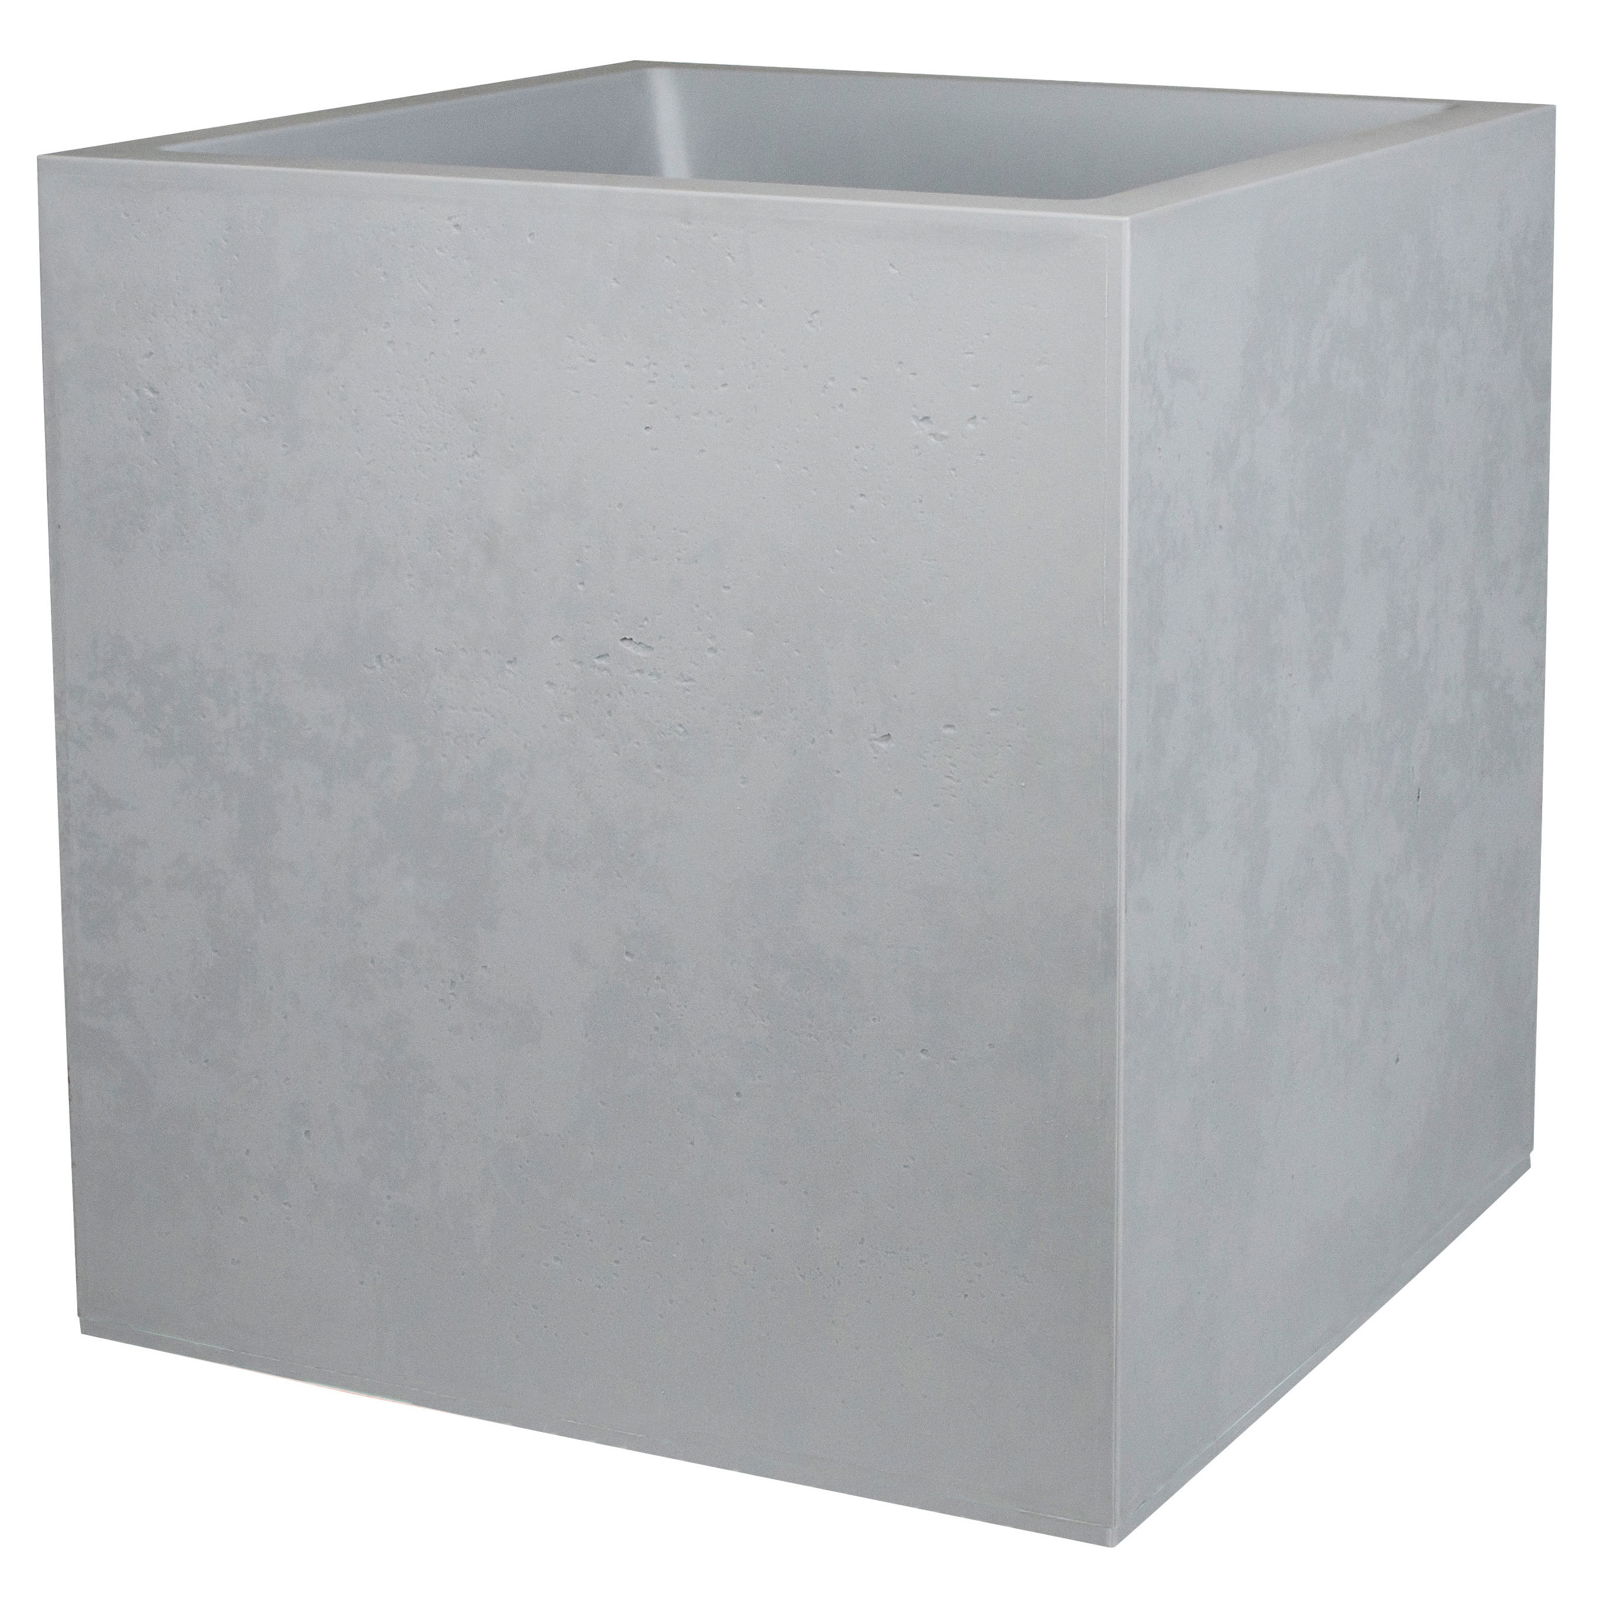 Pflanztrog 'Basalt Dado', betongrau, 49,5 x 49,5 x H 49,5 cm